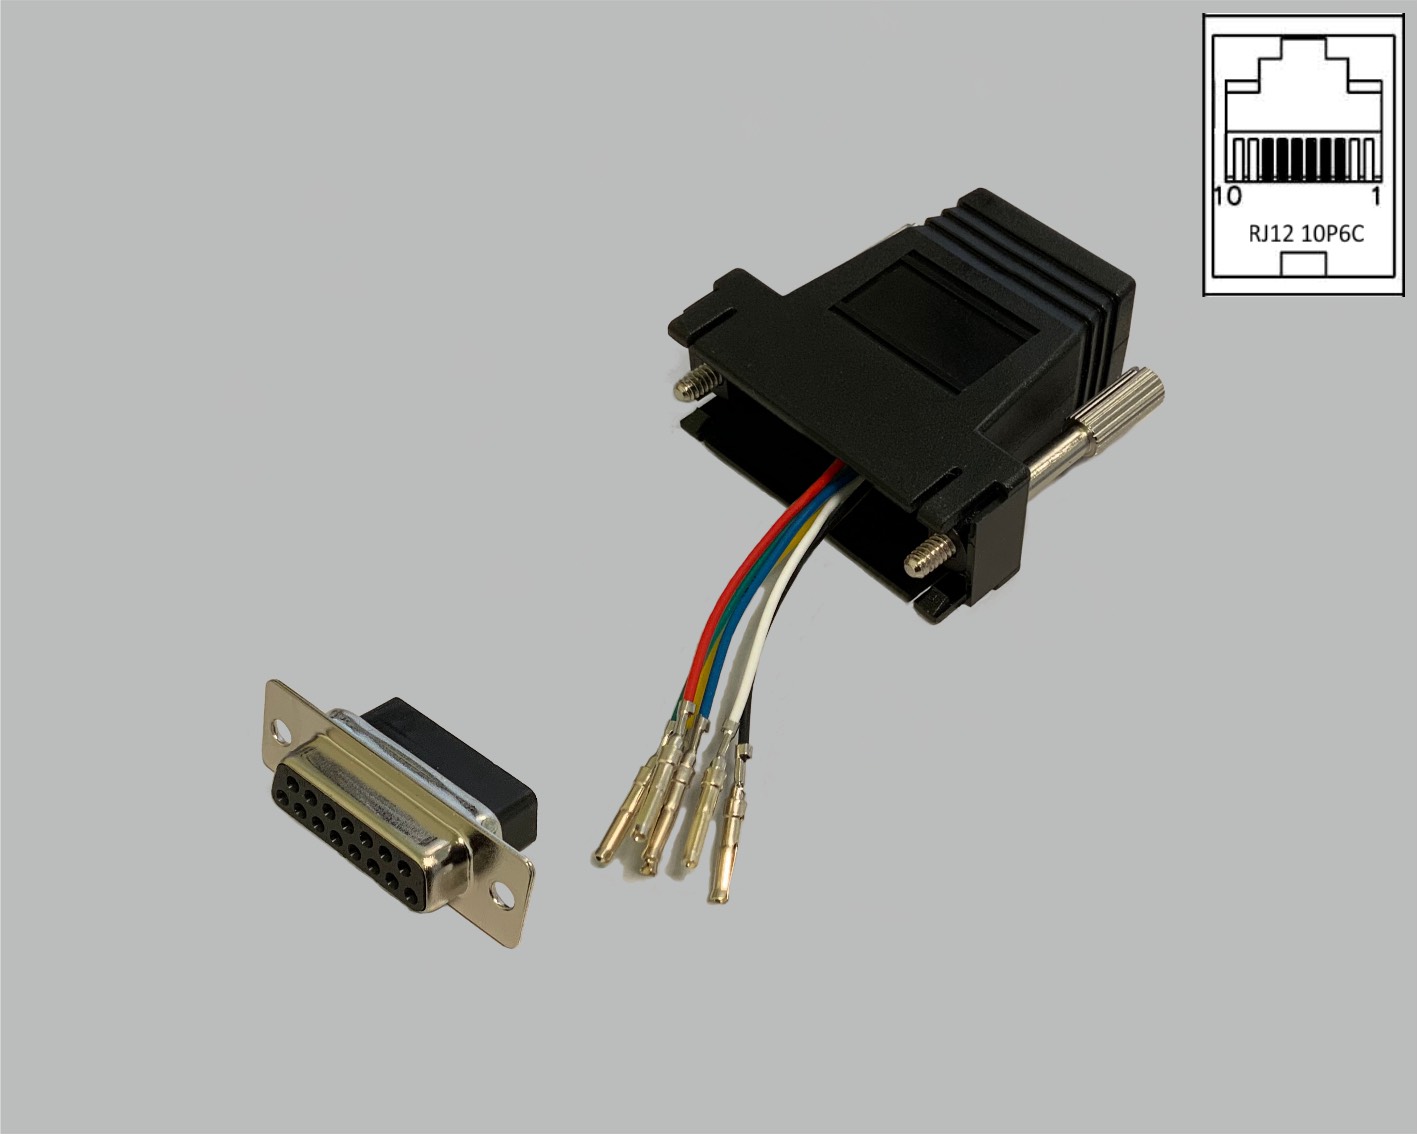 D-Sub/RJ adapter, freely configurable, D-Sub female connector 15-pole to RJ12 (10P6C) female connector, black